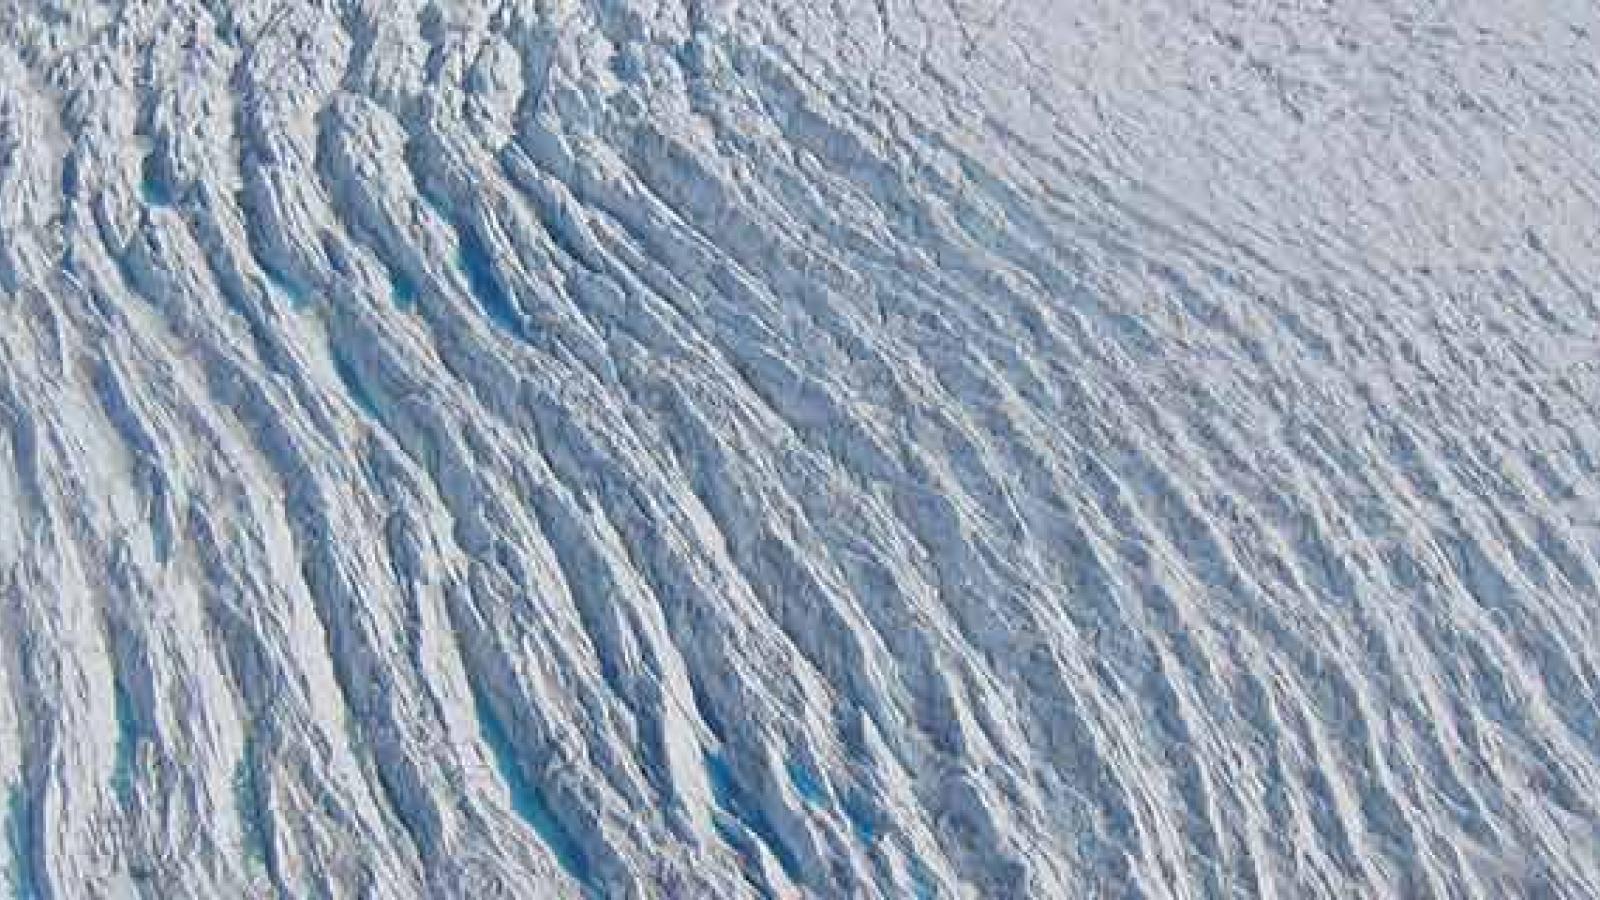 Crevasses on the Greenland Ice Sheet.